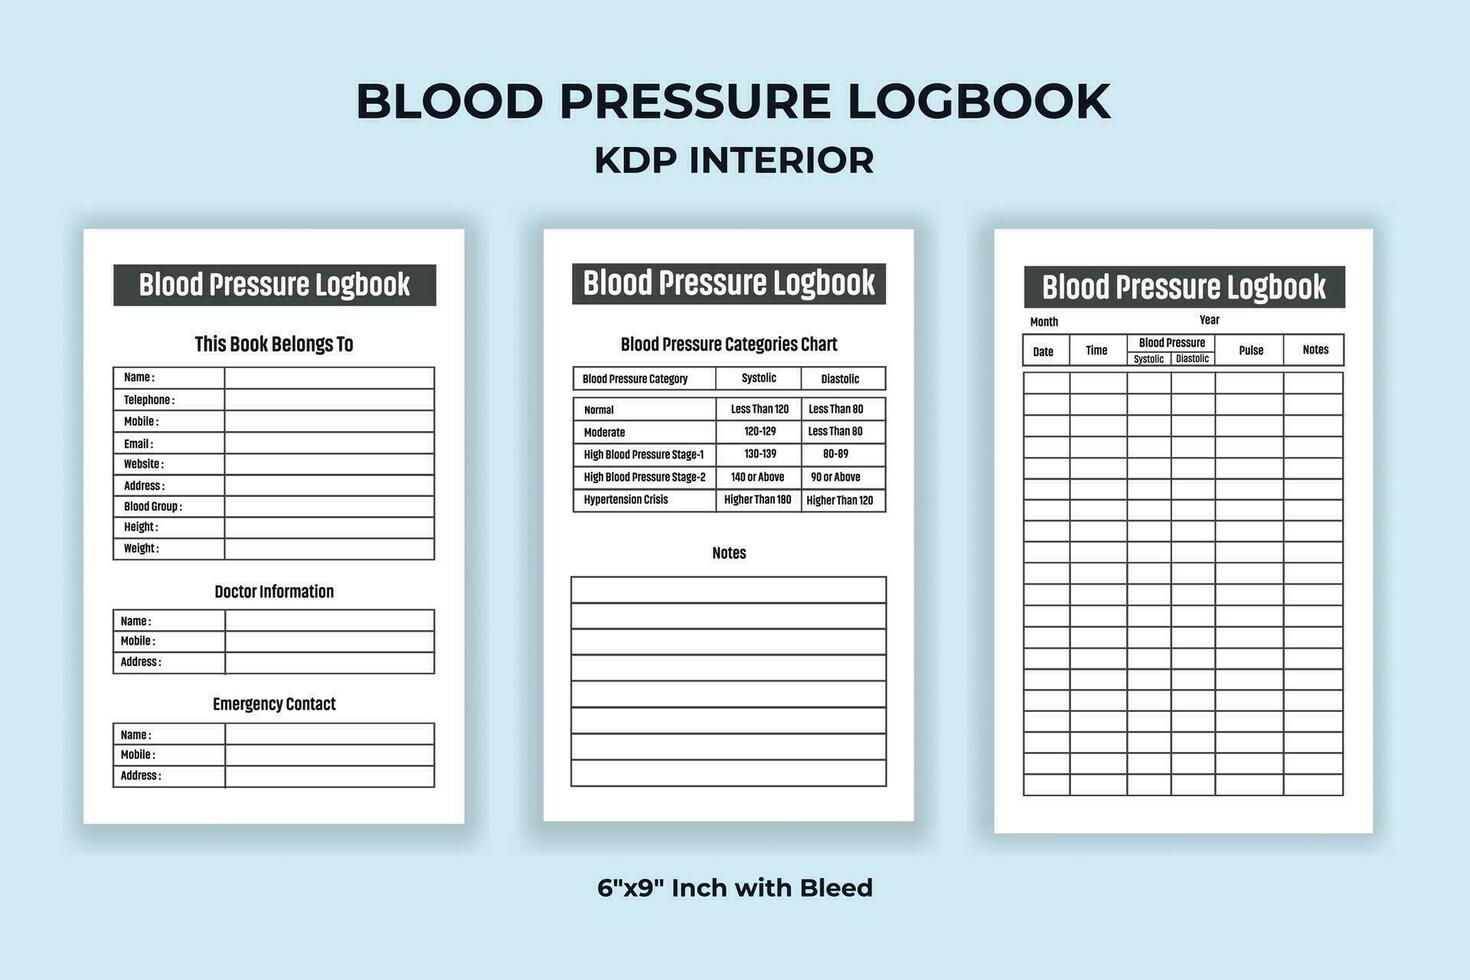 Blood Pressure Logbook KDP Interior vector